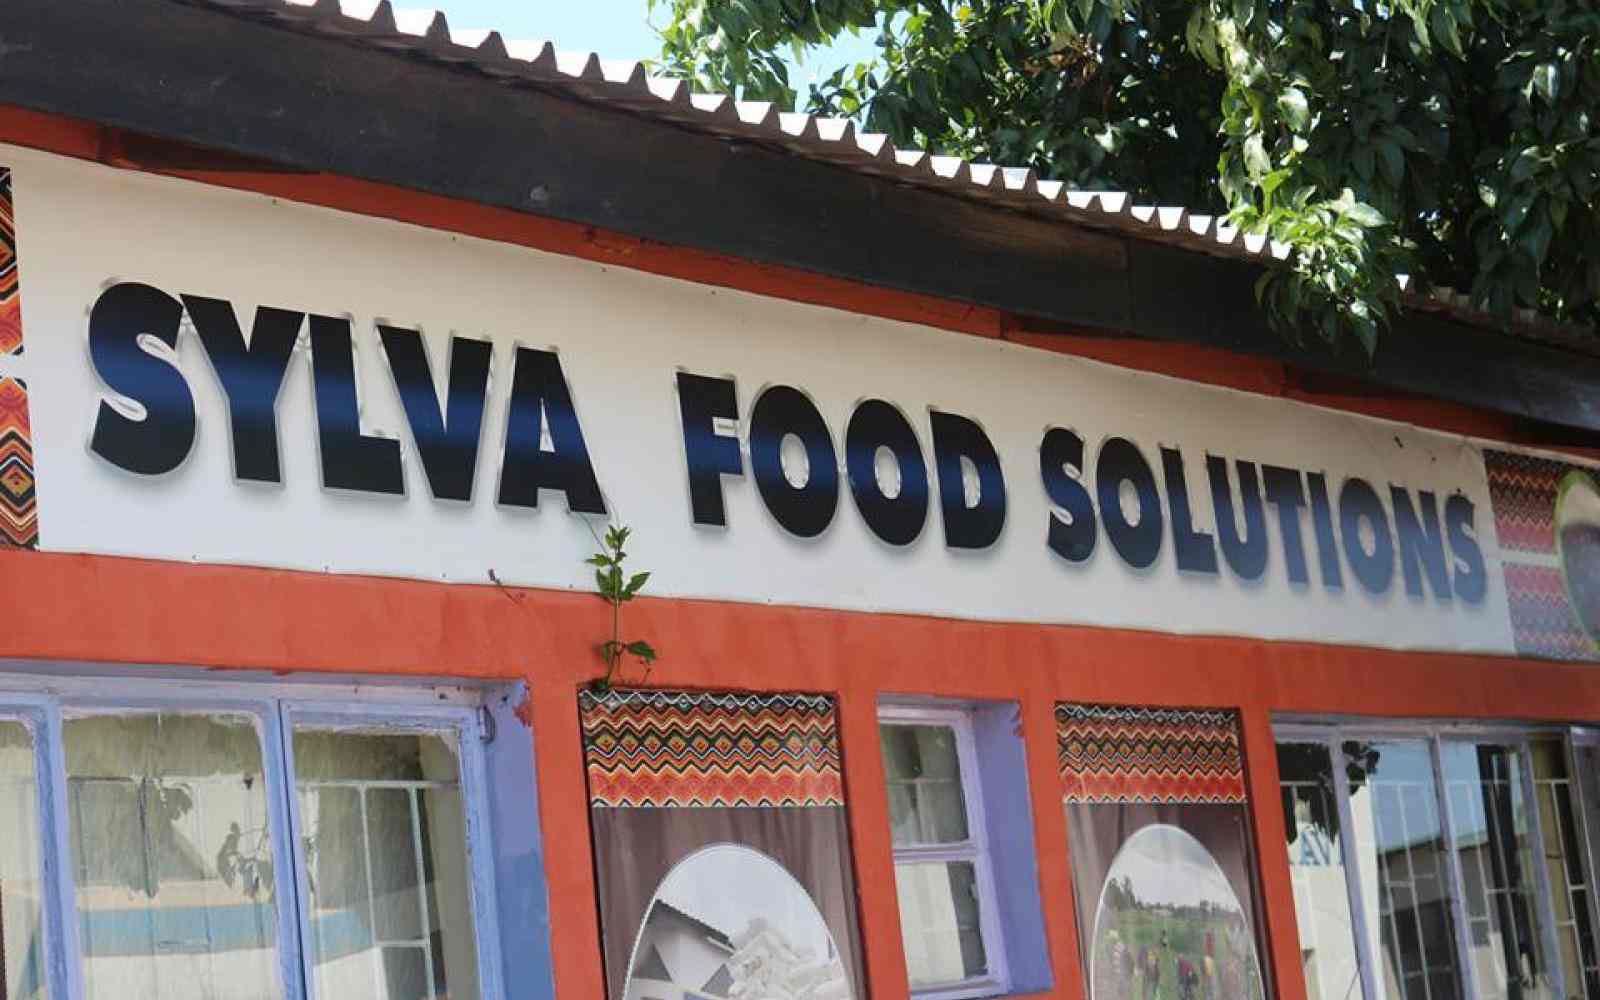 Sylva Food Solutions - Zambia